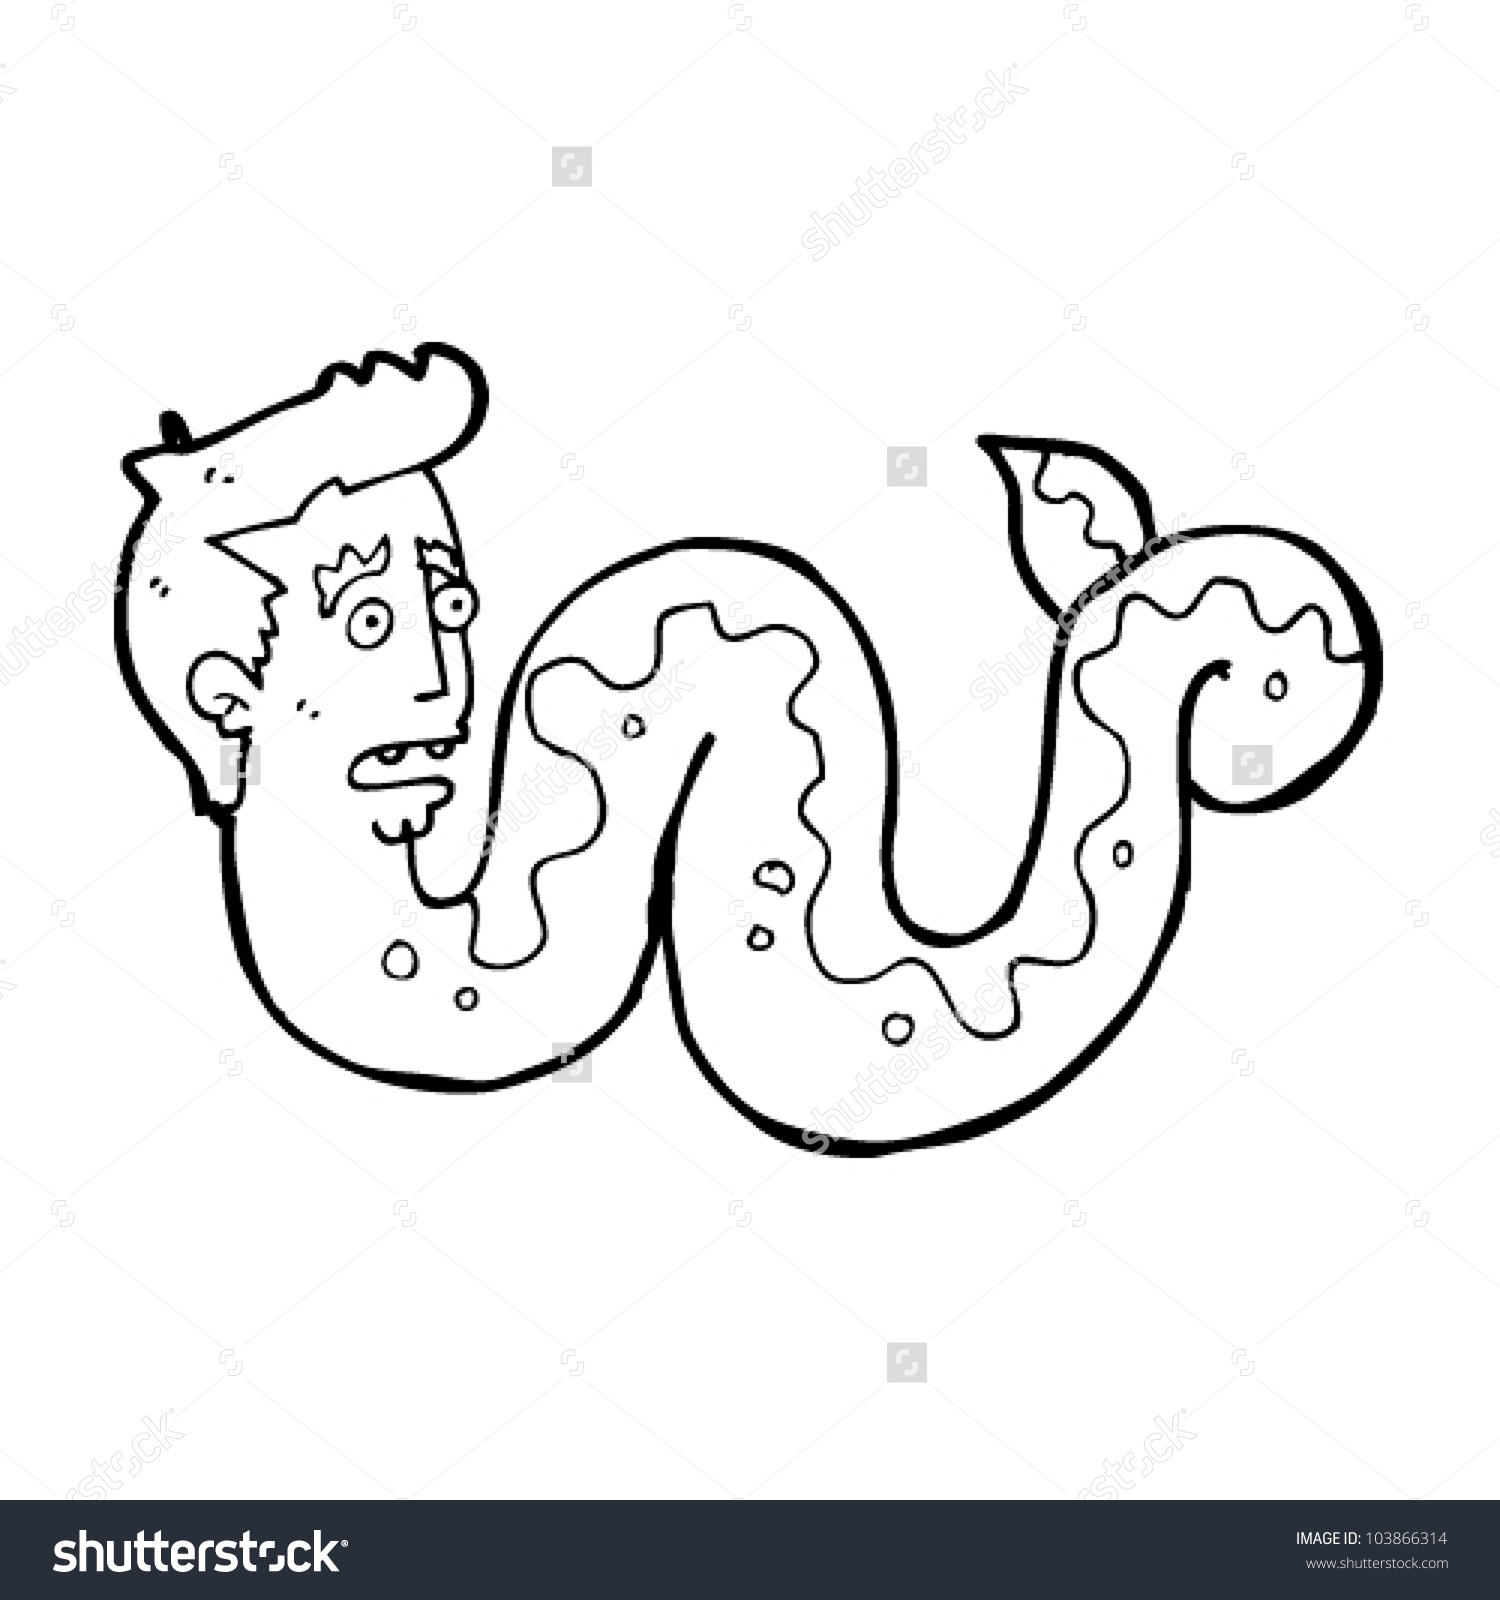 Snakeman coloring #2, Download drawings